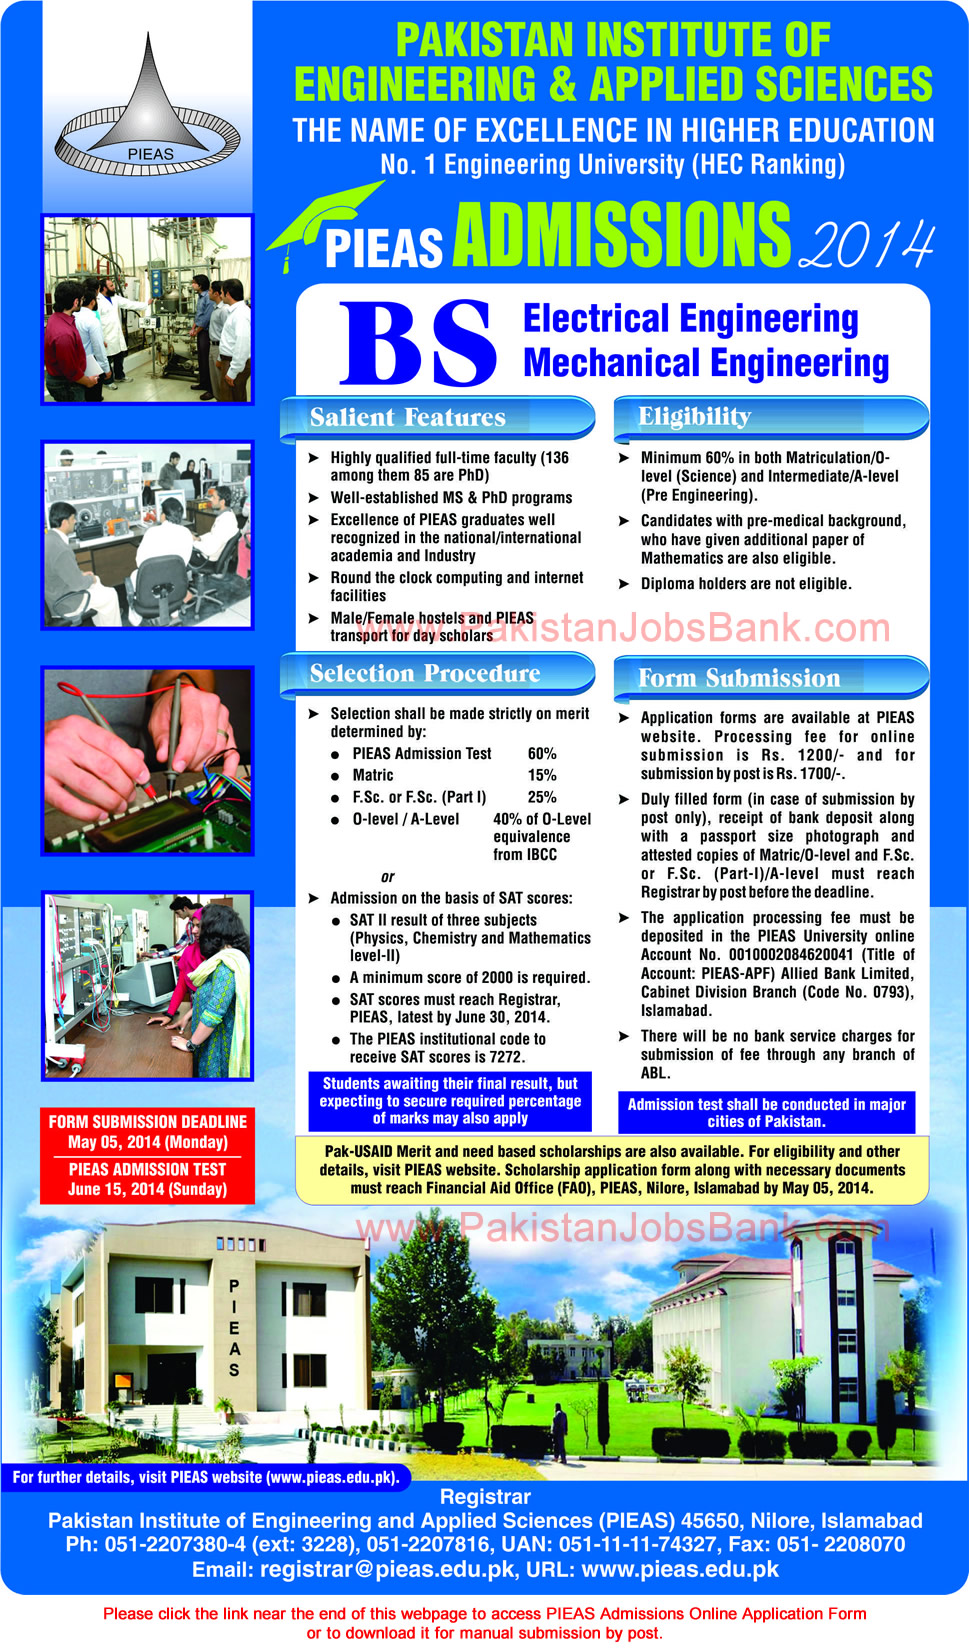 PIEAS Pak-USAID Scholarships 2014 Undergraduate / BS Electrical & Mechanical Engineering